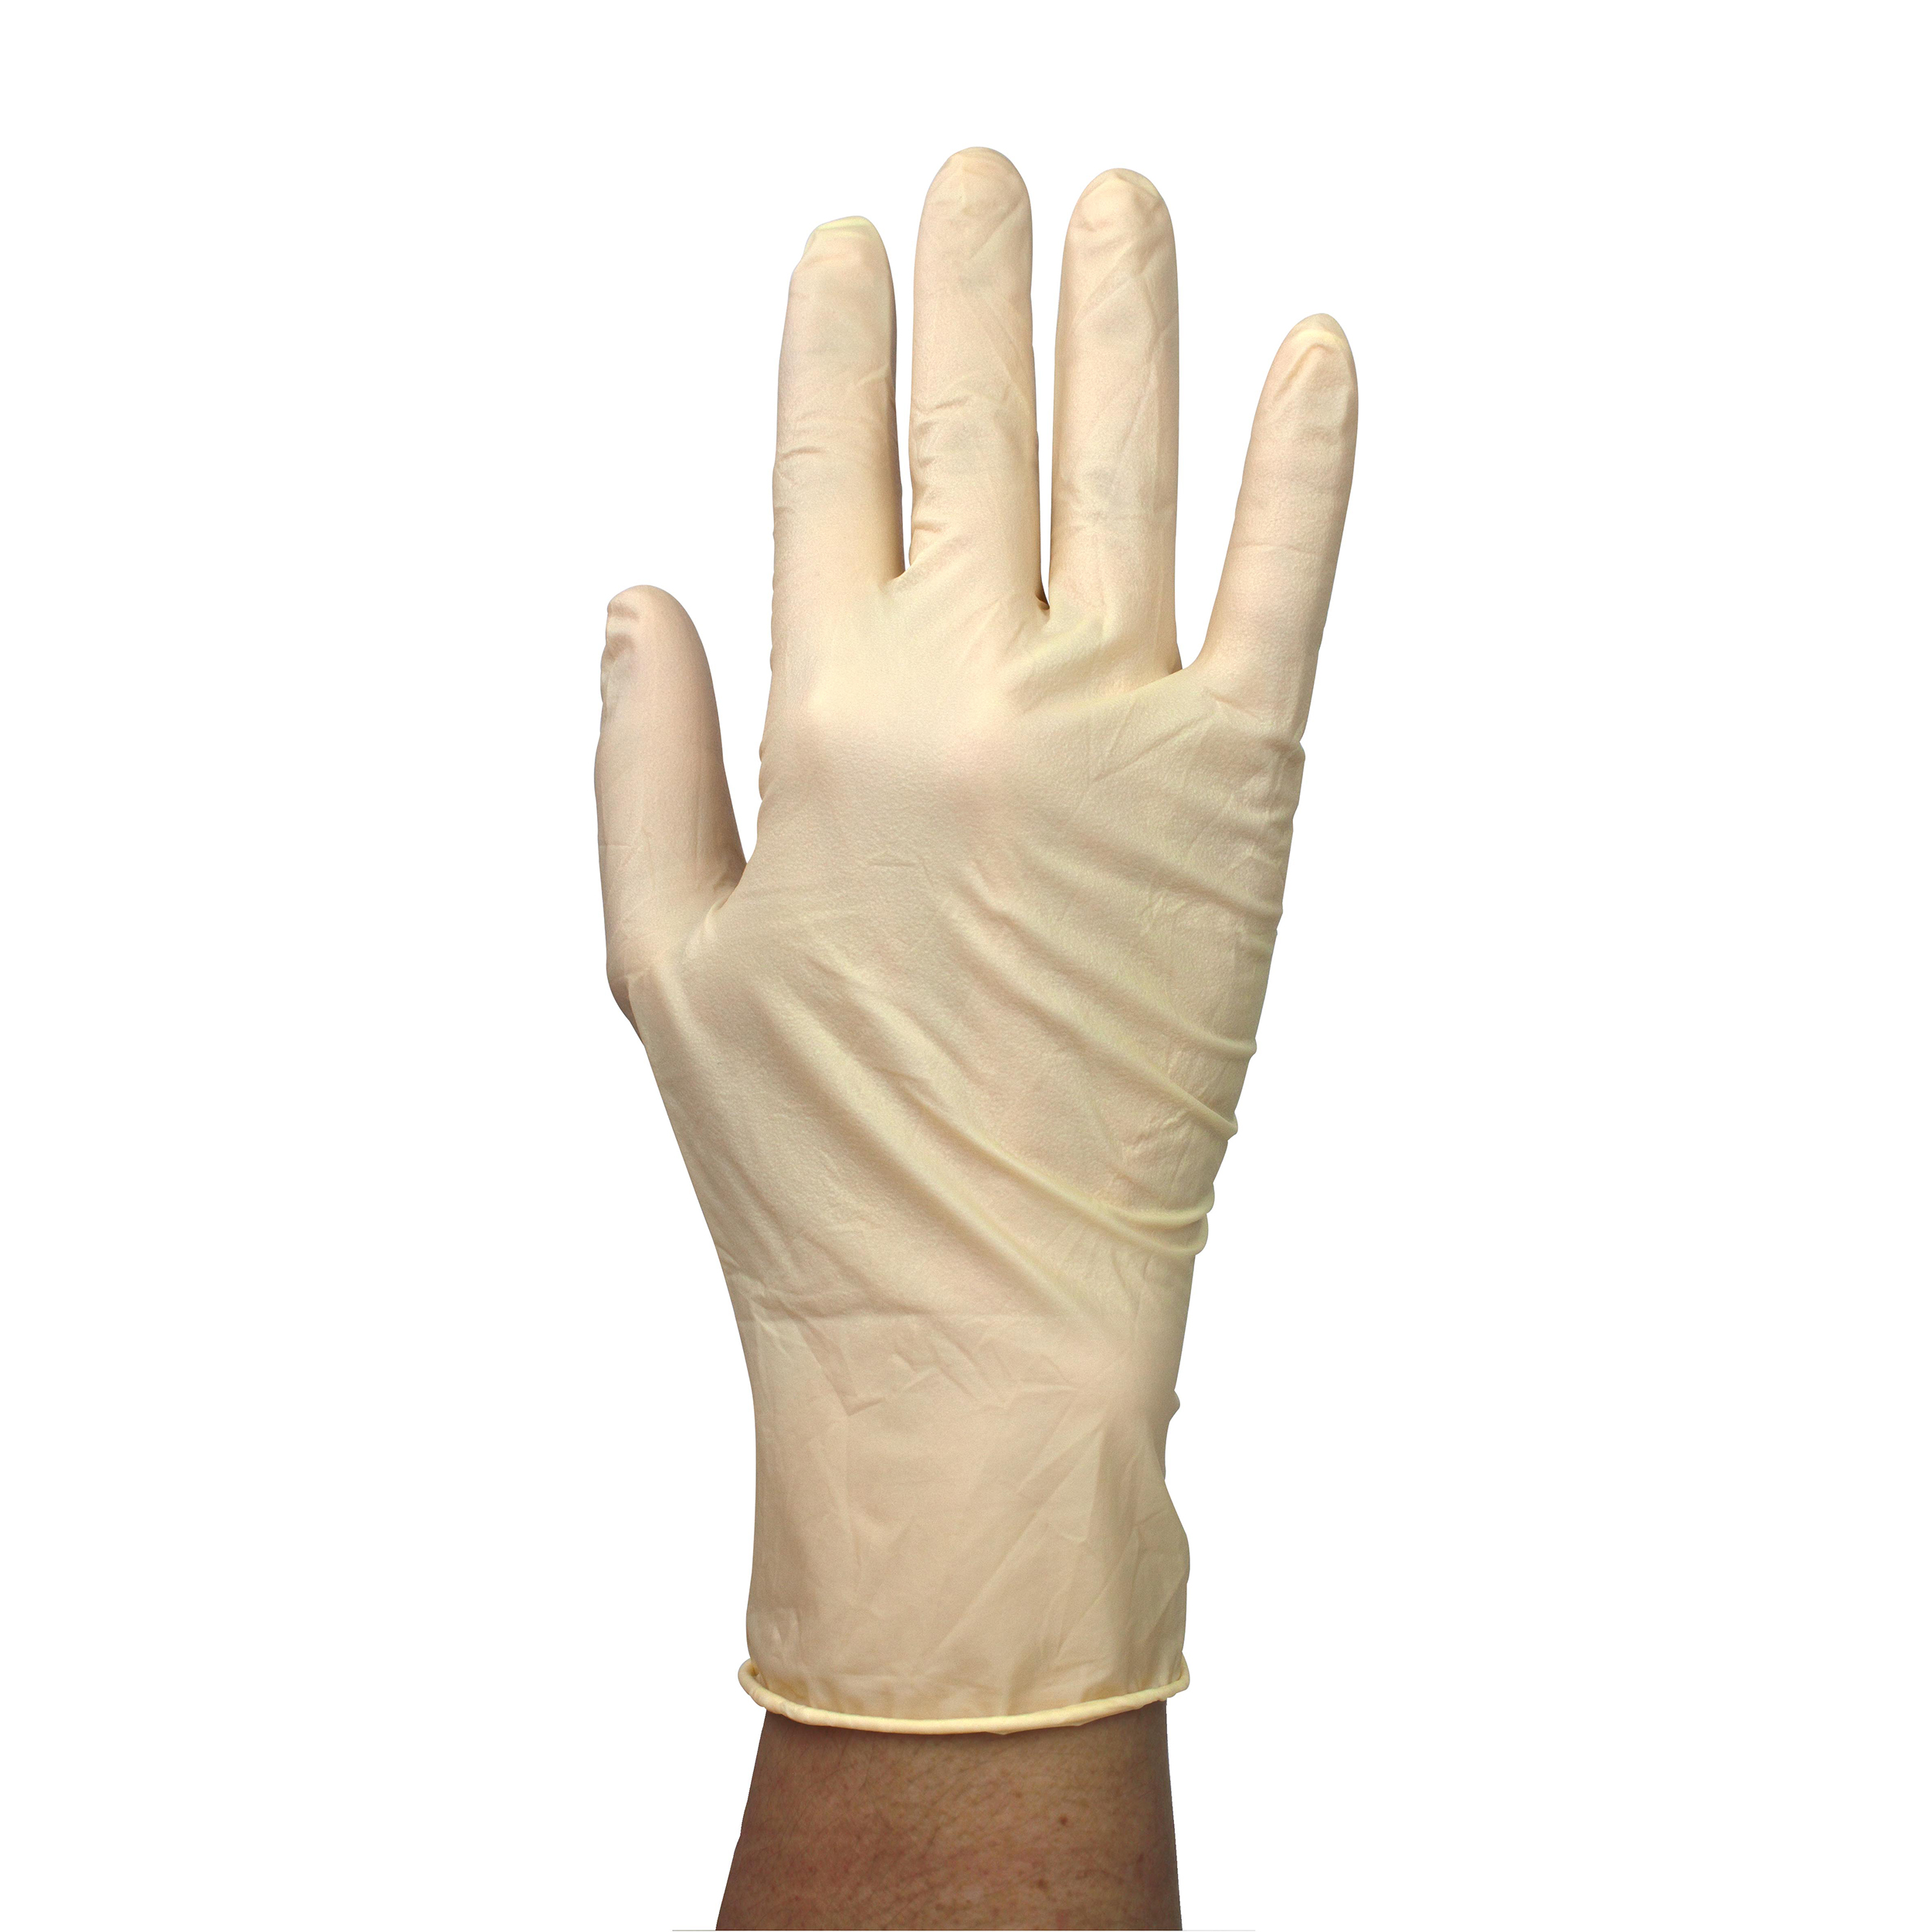 Sterile Latex Examination Glove-Powder Free - Pairs (Size M)